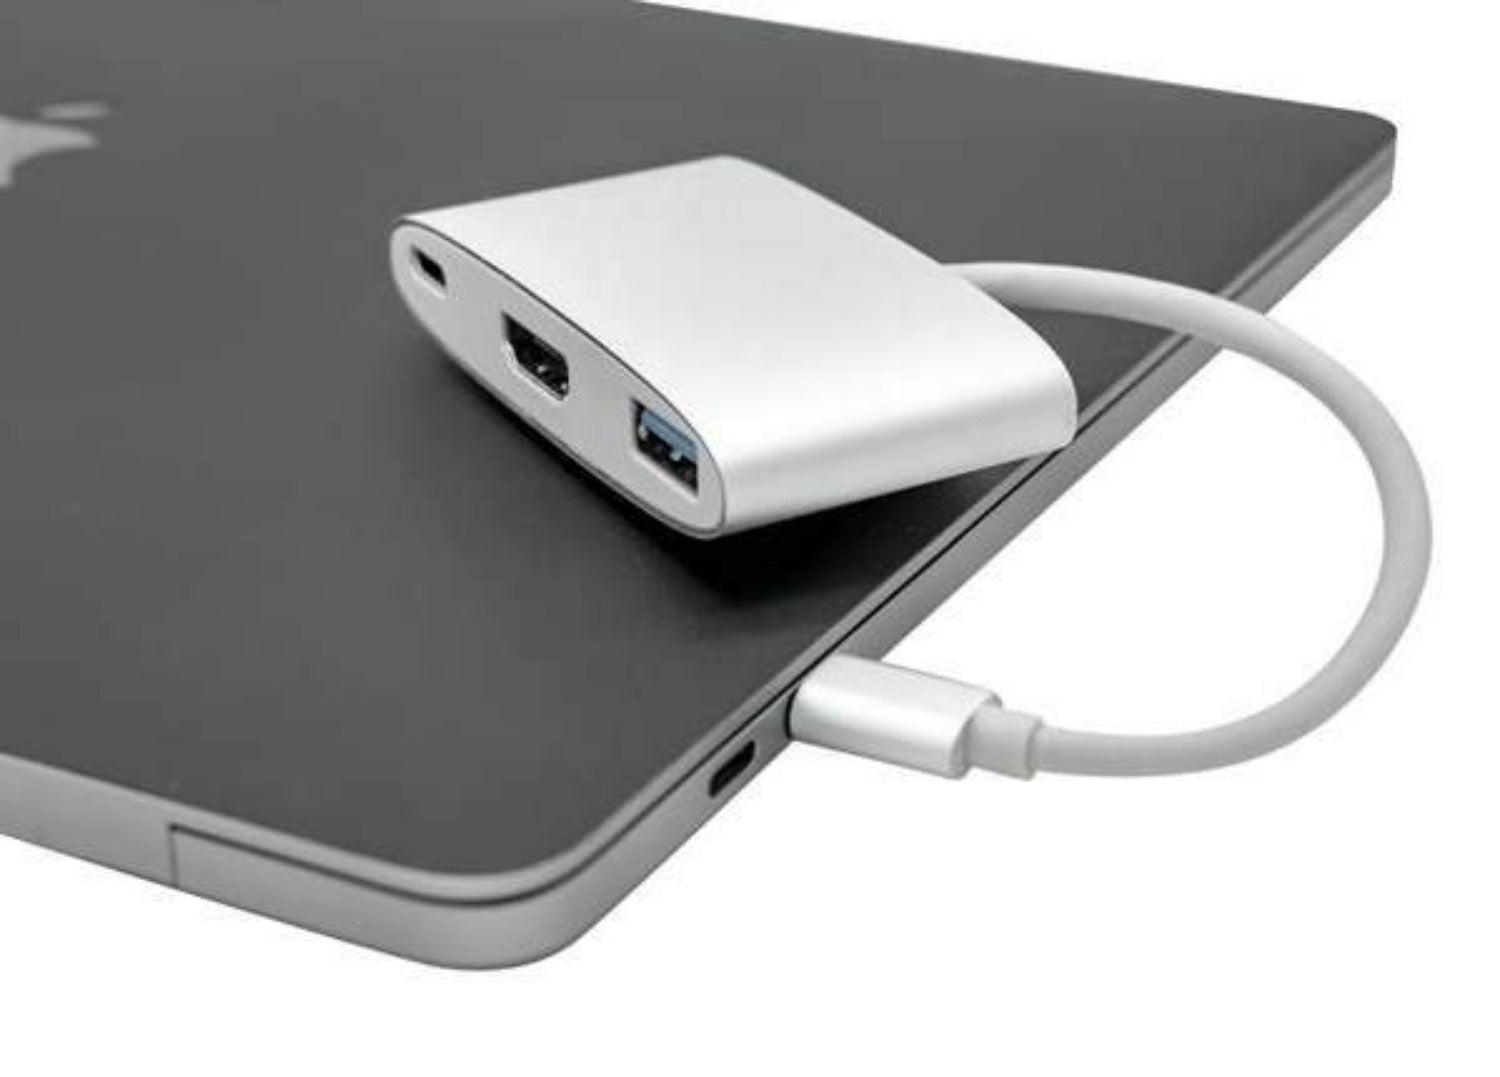 USB3 connectivity solution